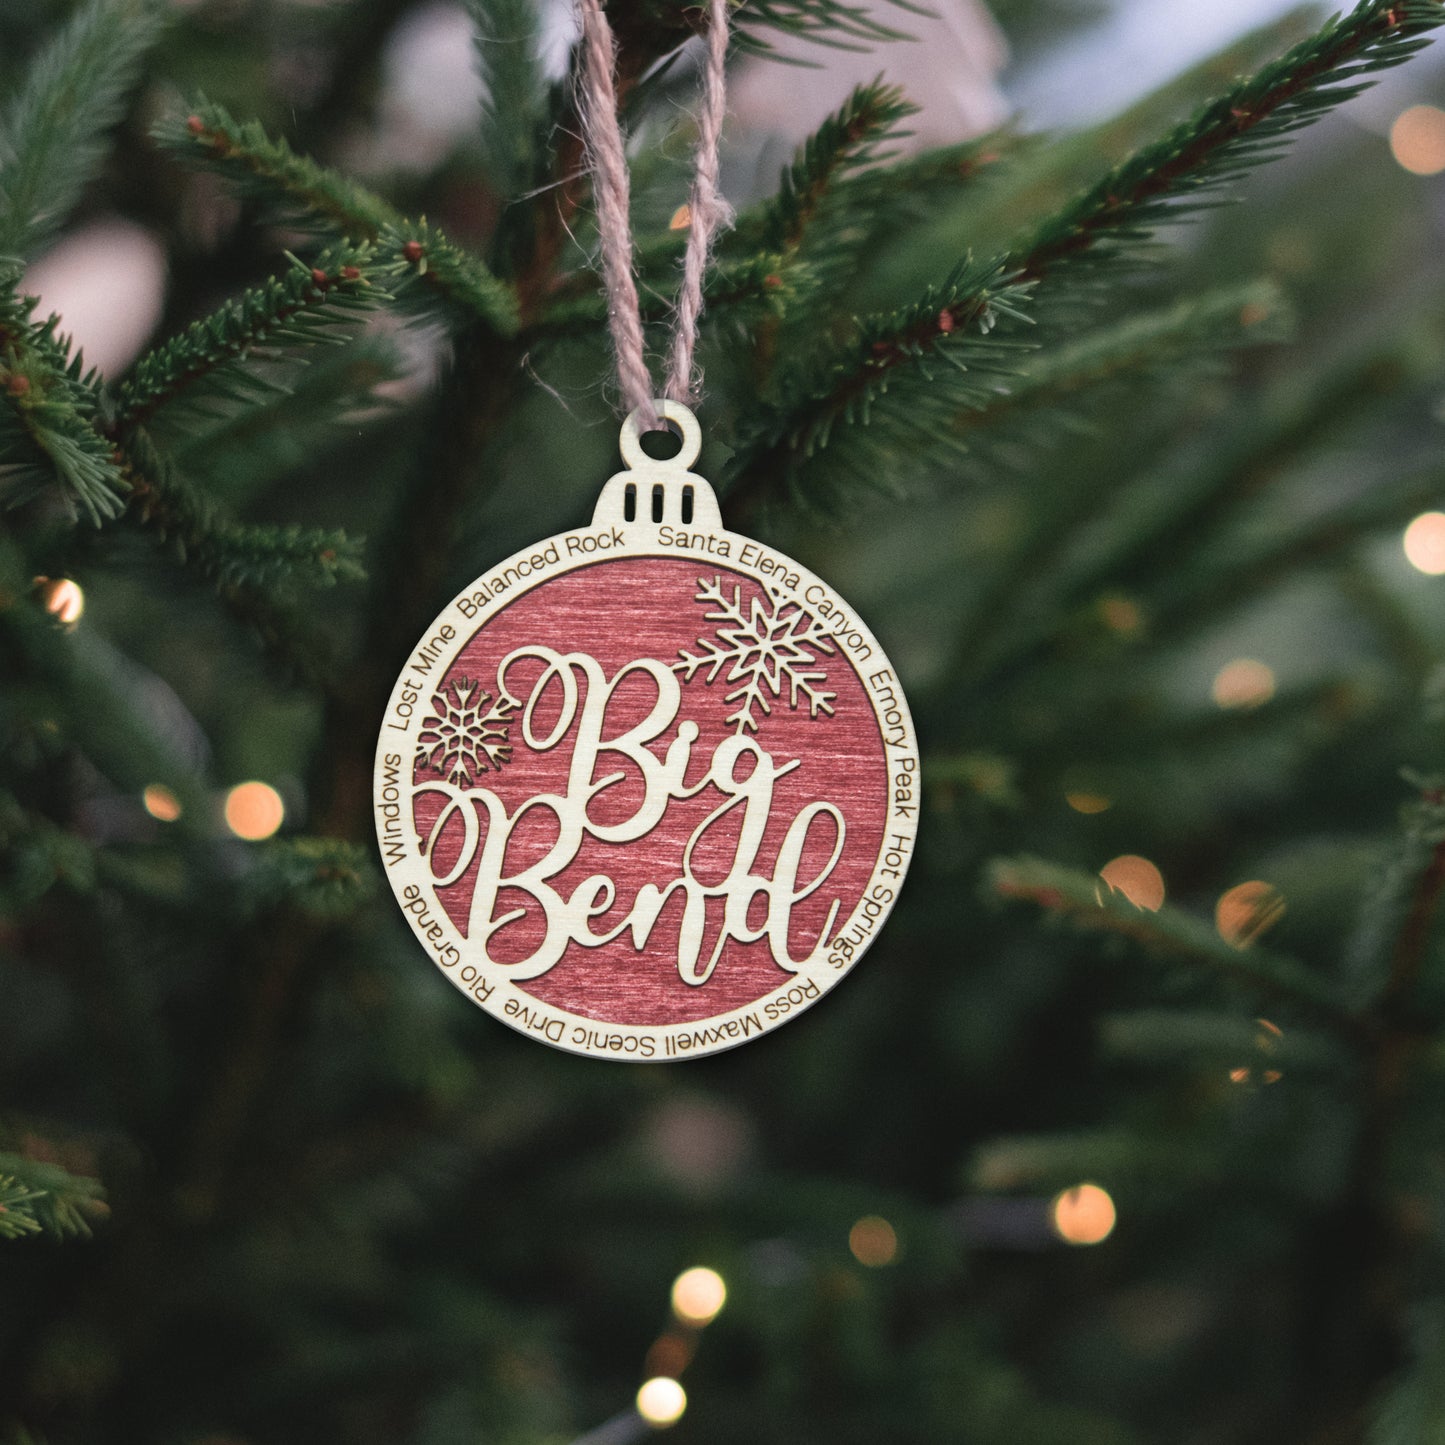 Big Bend National Park Christmas Ornament